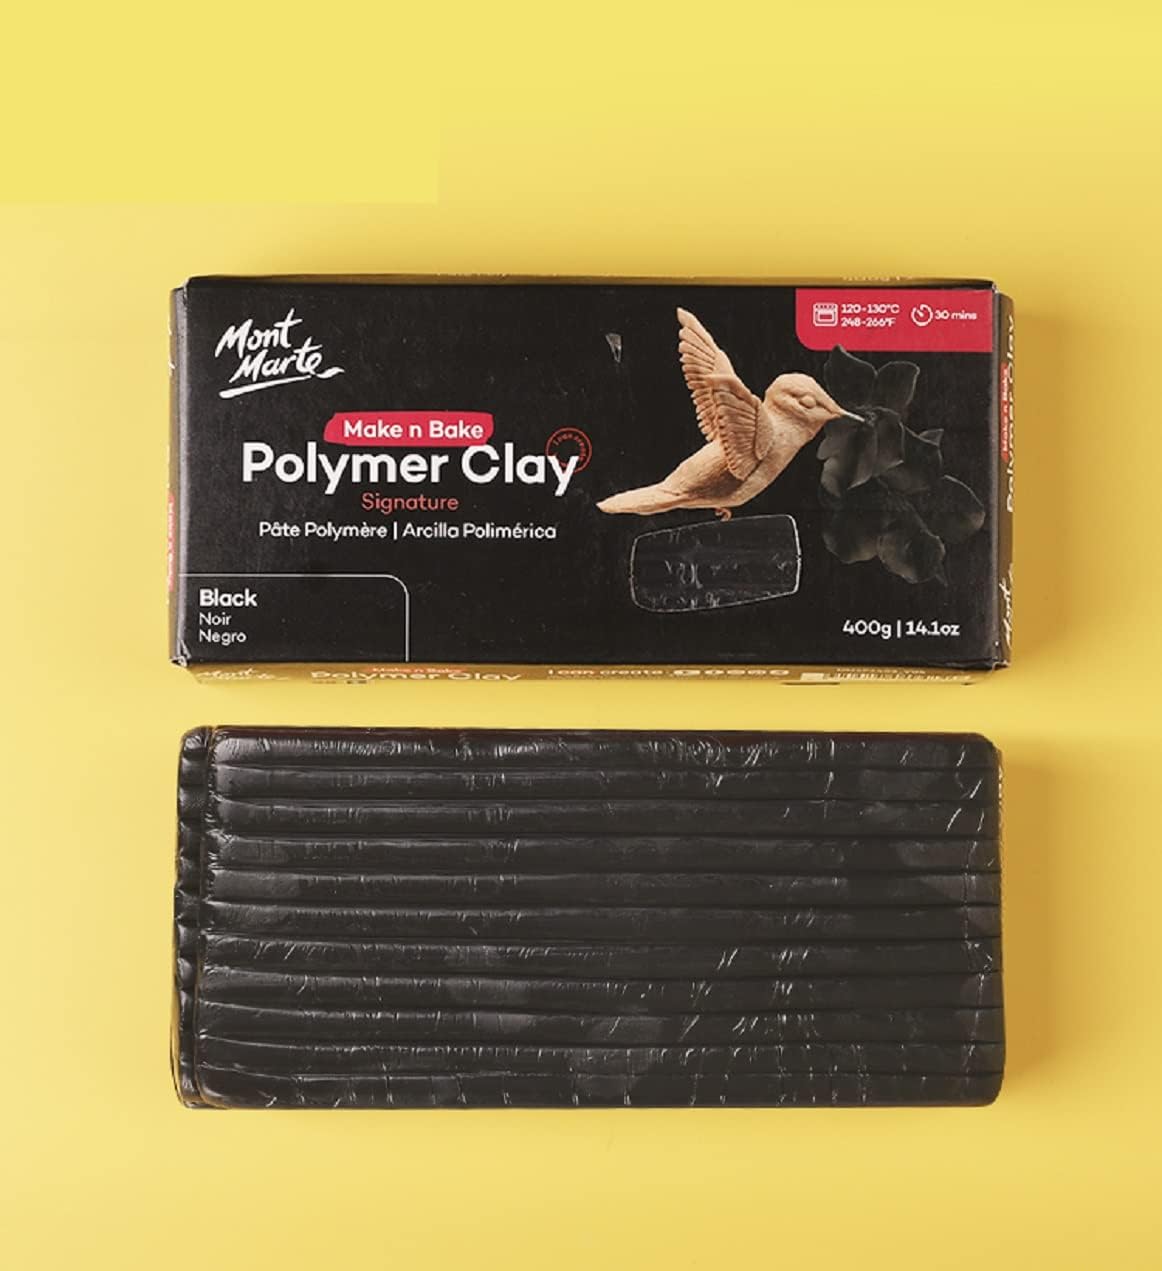 Mont Marte Make n Bake Polymer Clay Signature 400g Block